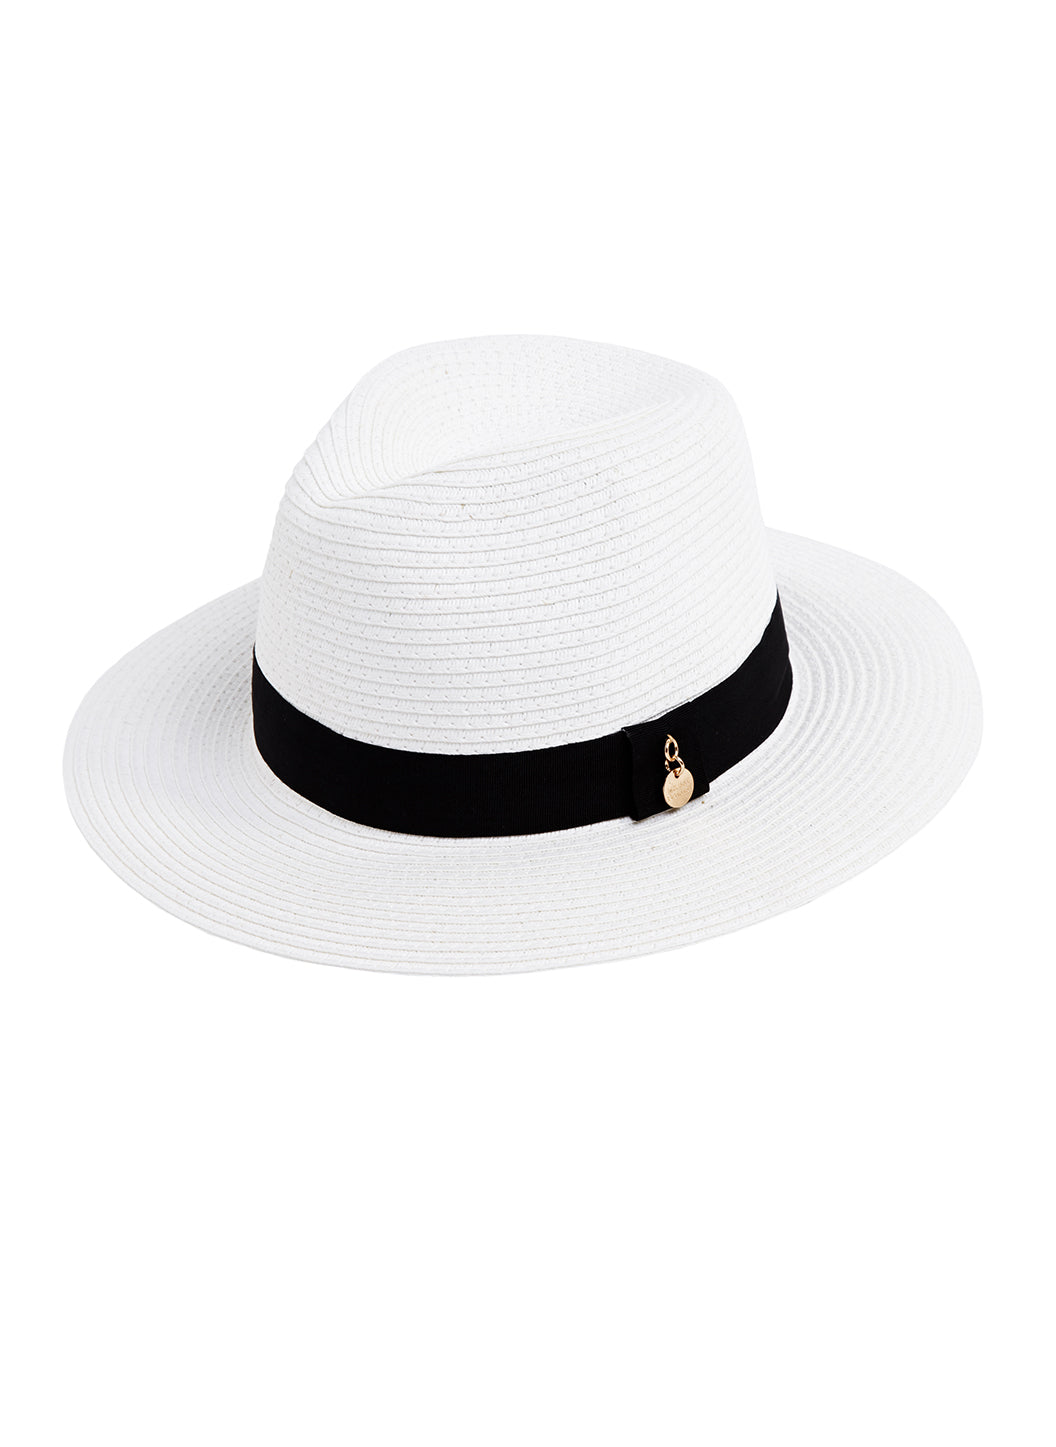 Fedora Hat White Black